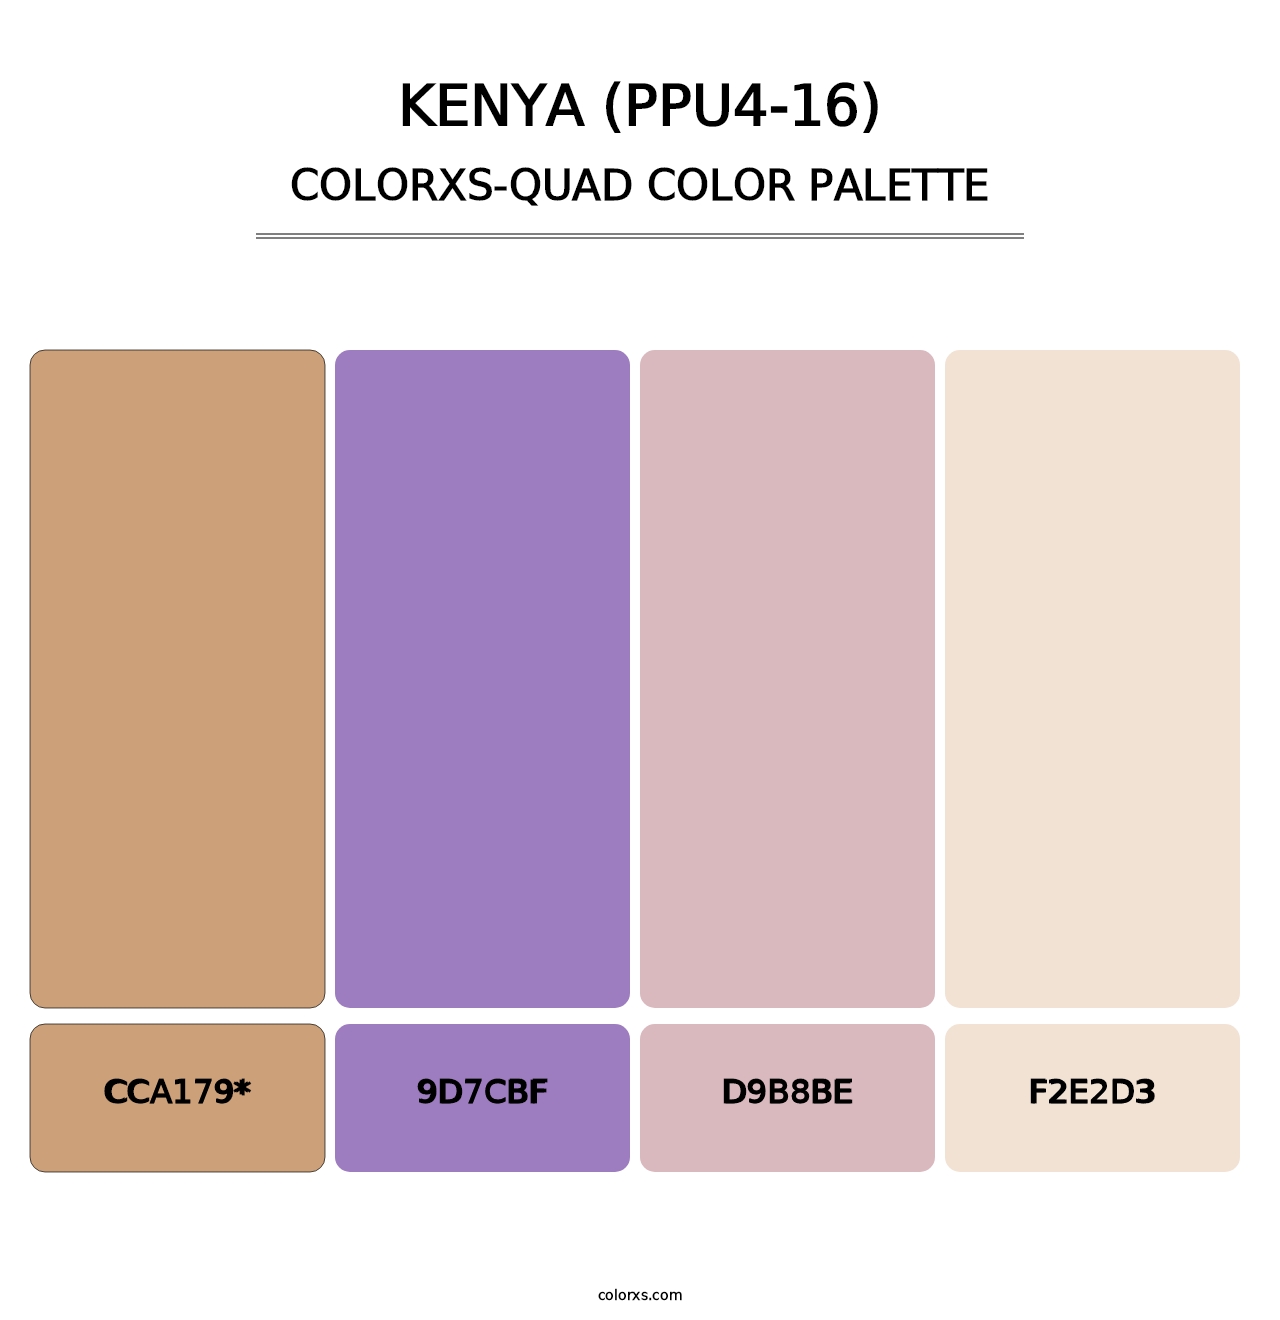 Kenya (PPU4-16) - Colorxs Quad Palette